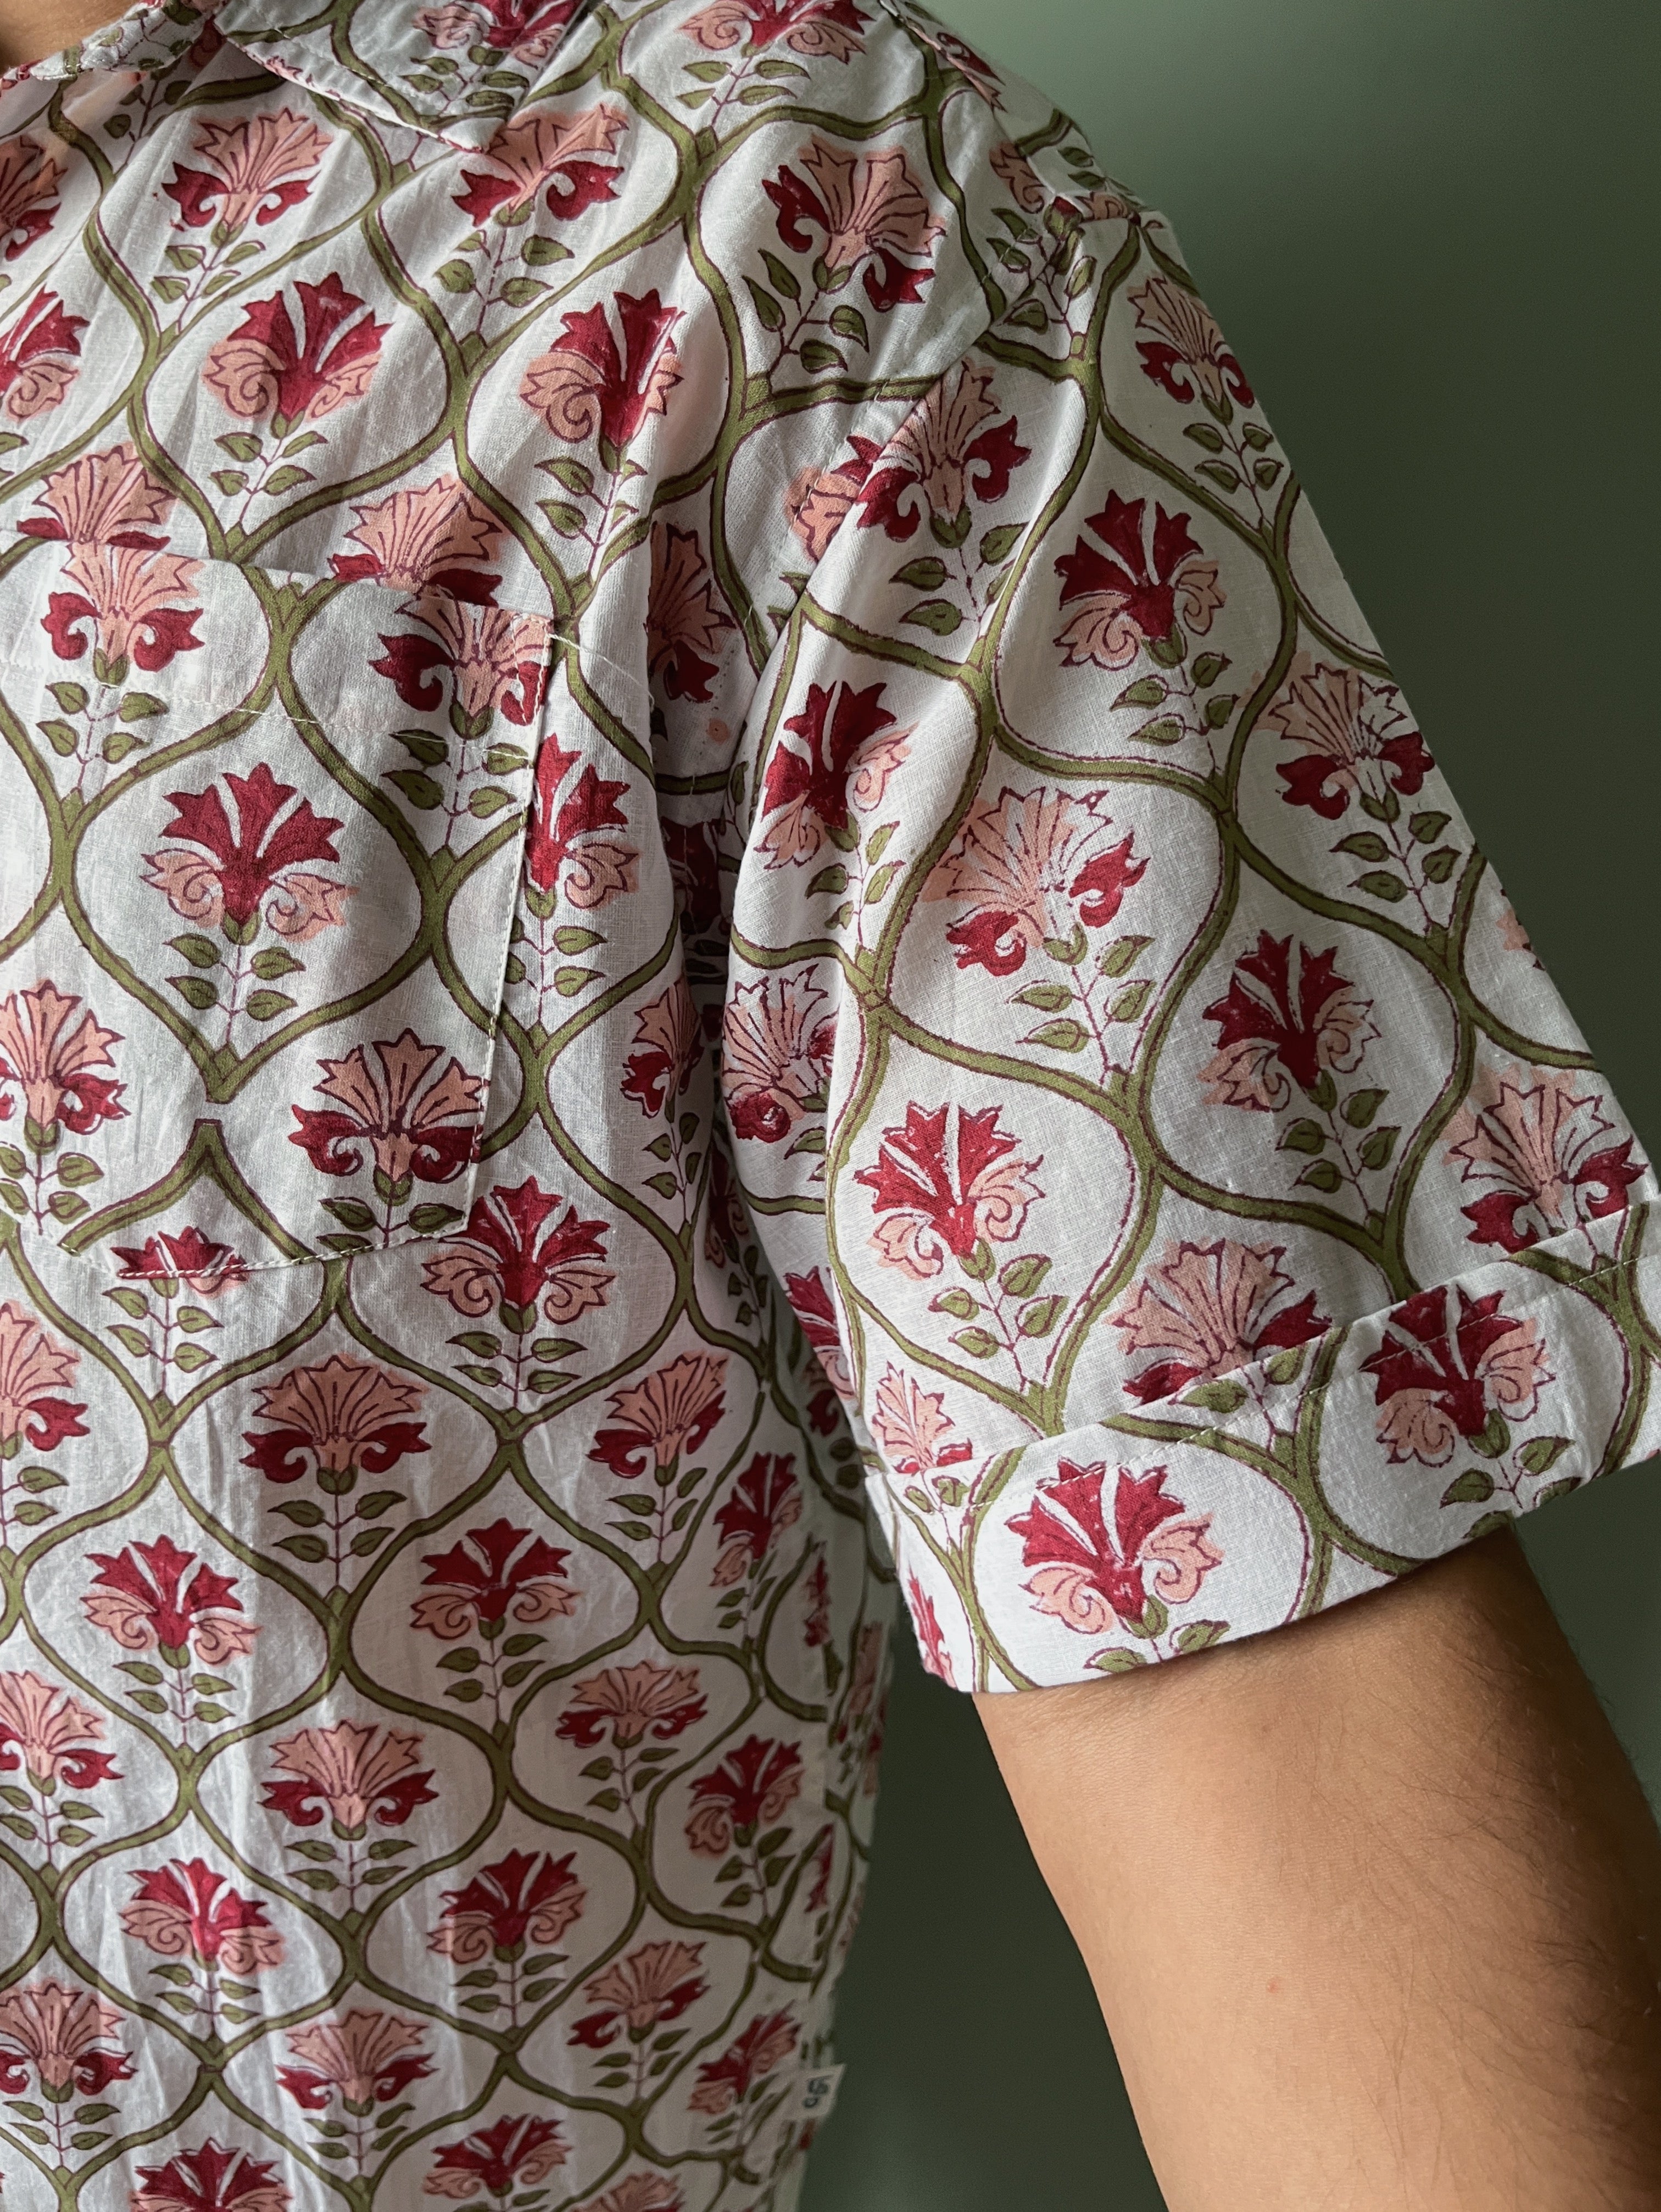 floral print shirts